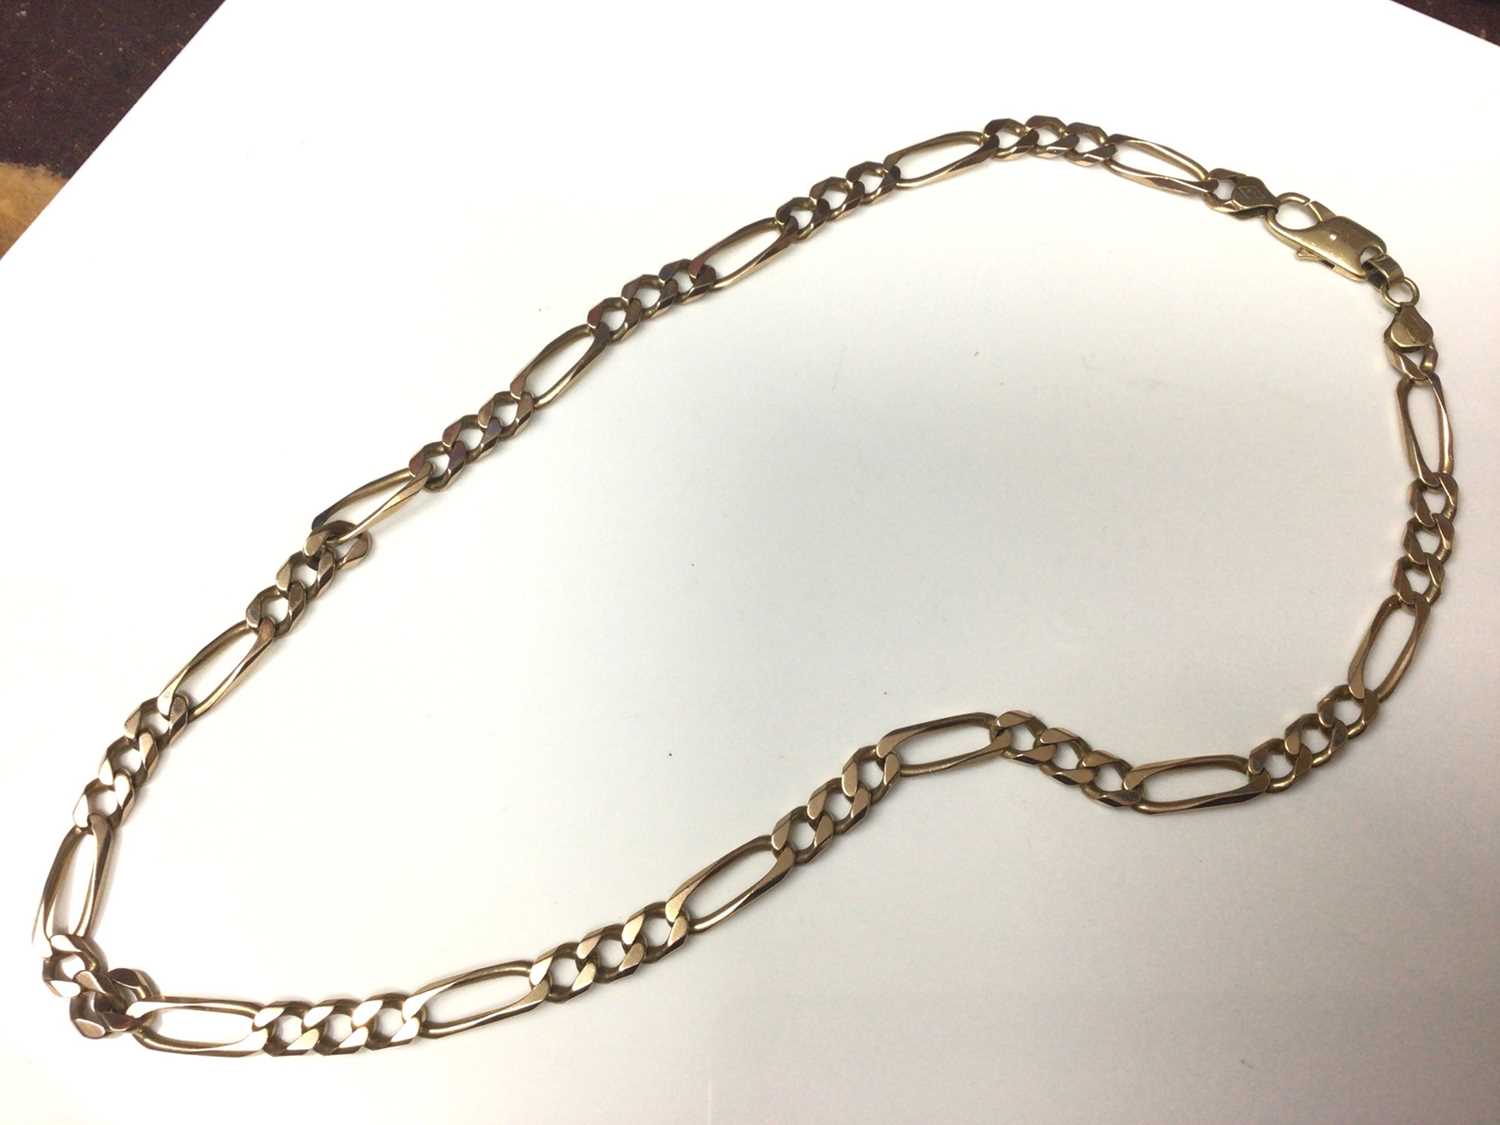 9ct gold flat curb link chain, 60cm long